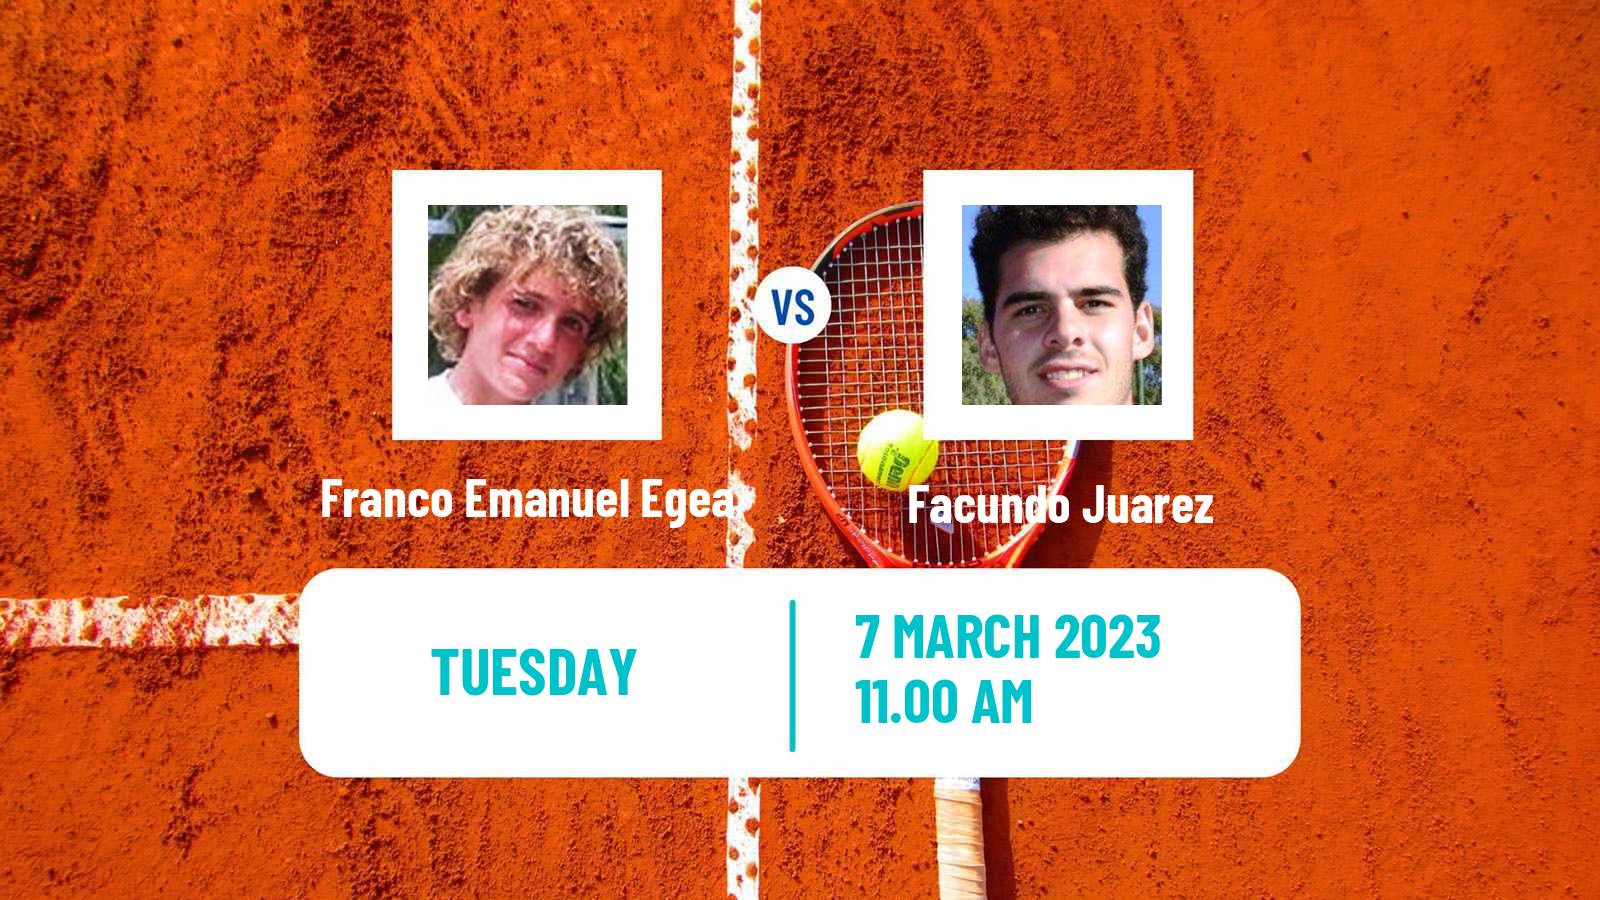 Tennis ITF Tournaments Franco Emanuel Egea - Facundo Juarez